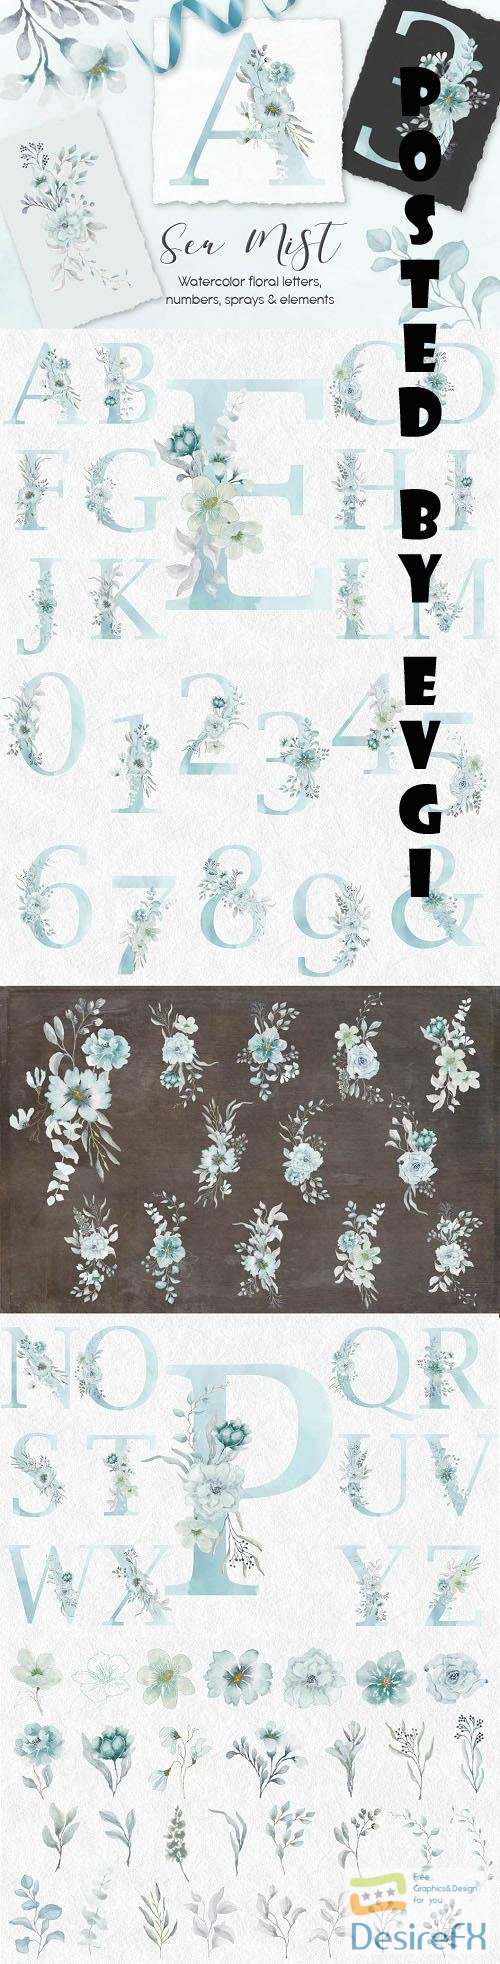 Sea Mist watercolor alphabet - 6221625